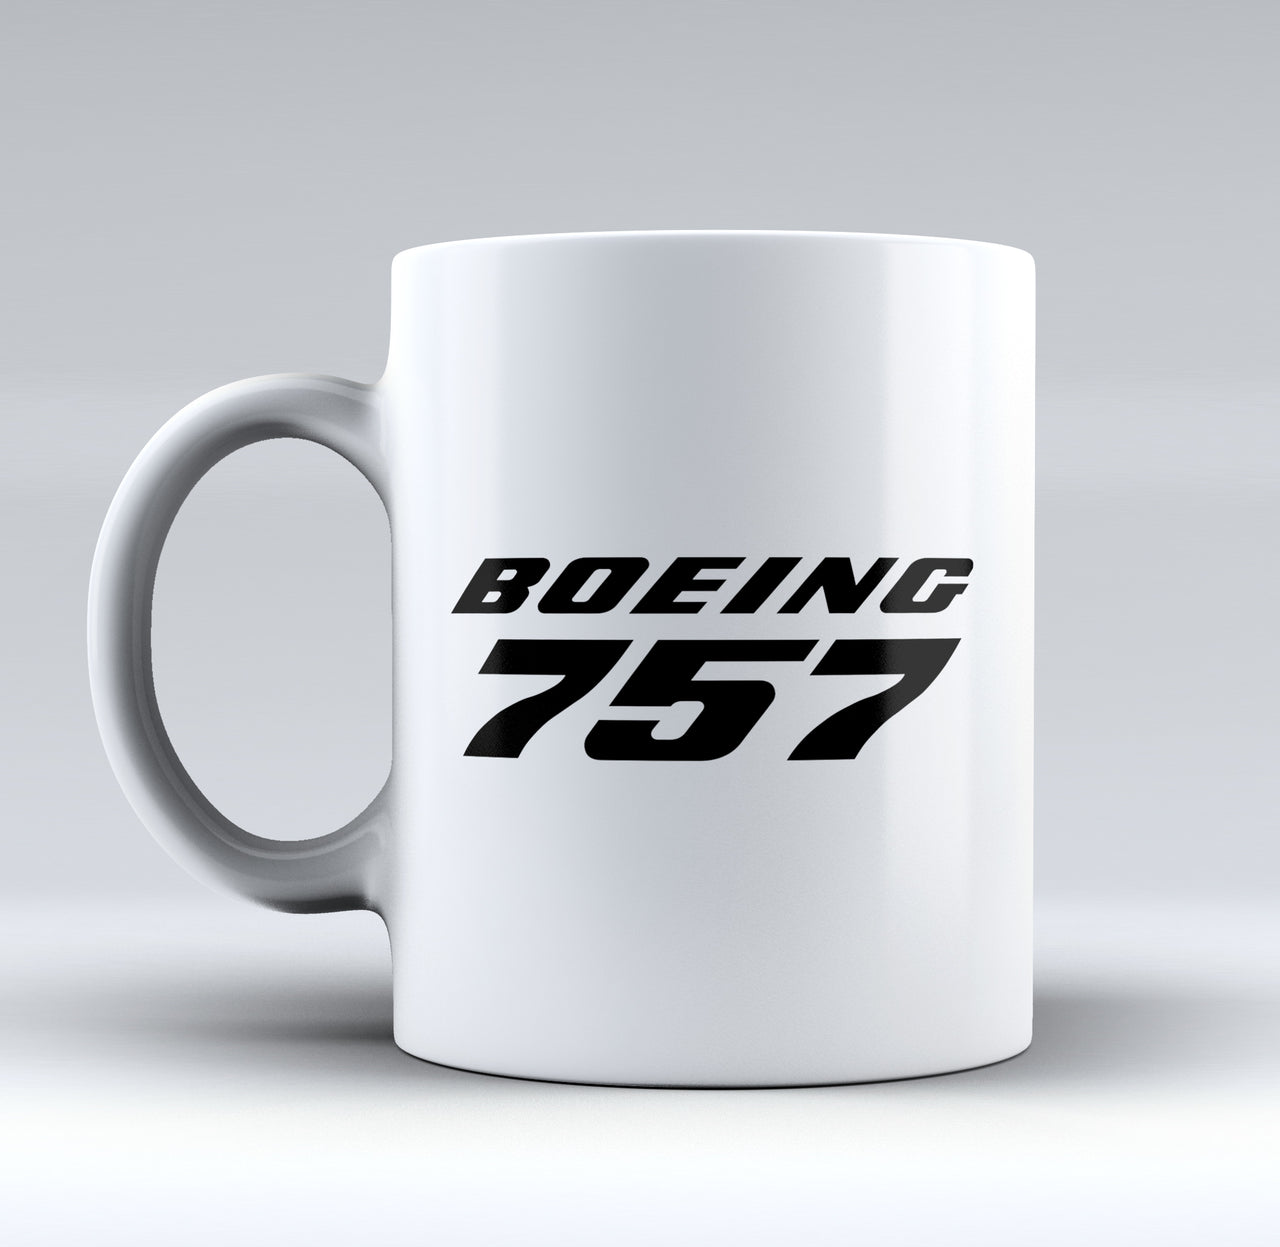 Boeing 757 & Text Designed Mugs